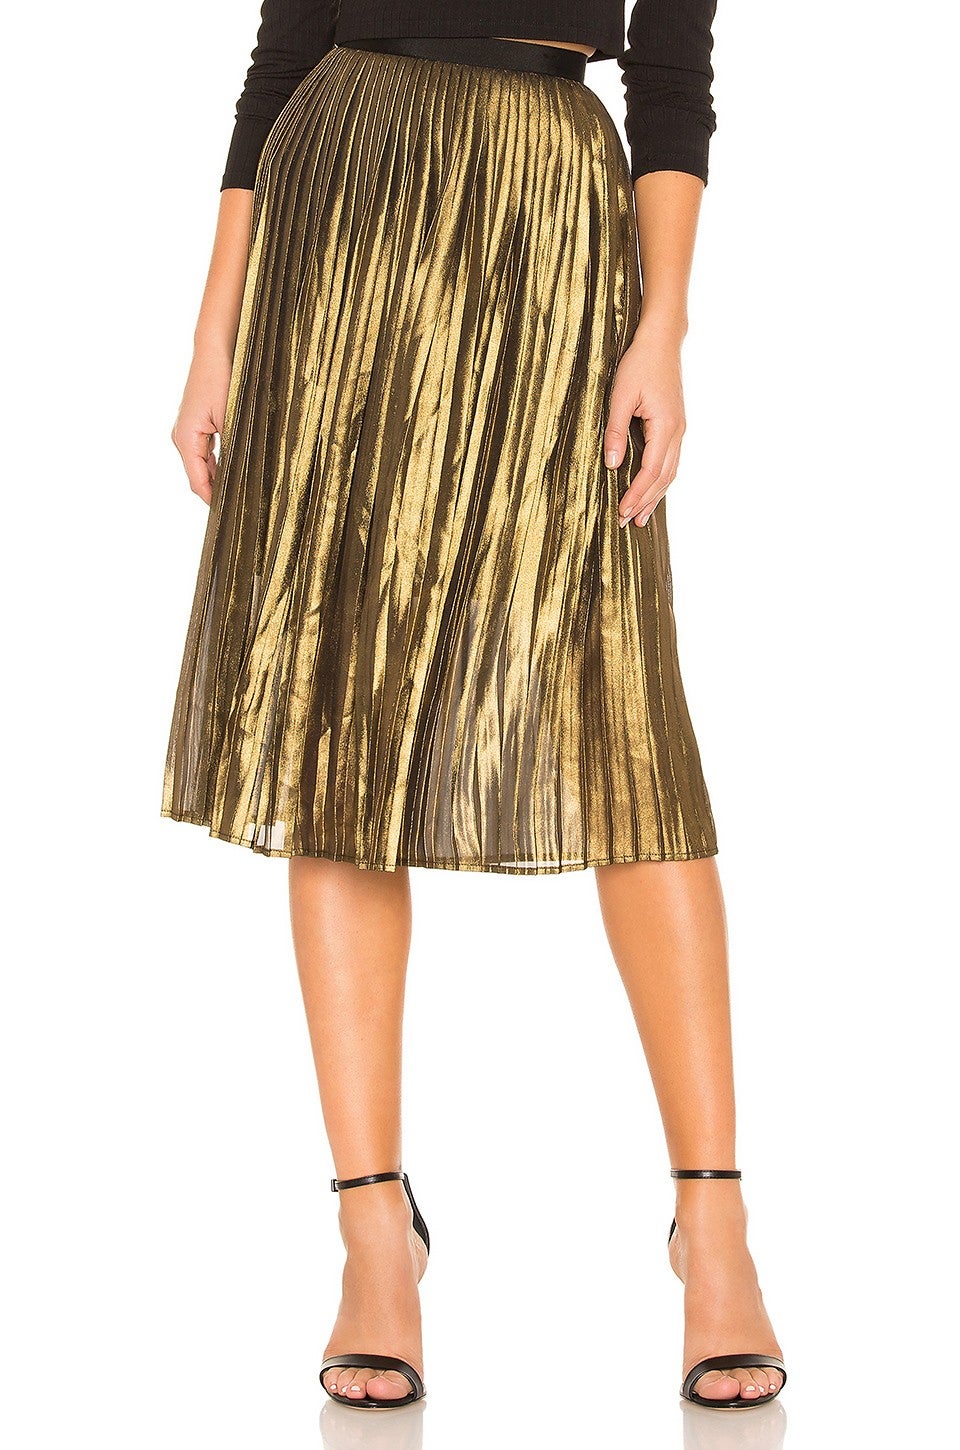 BB Dakota gold pleated skirt